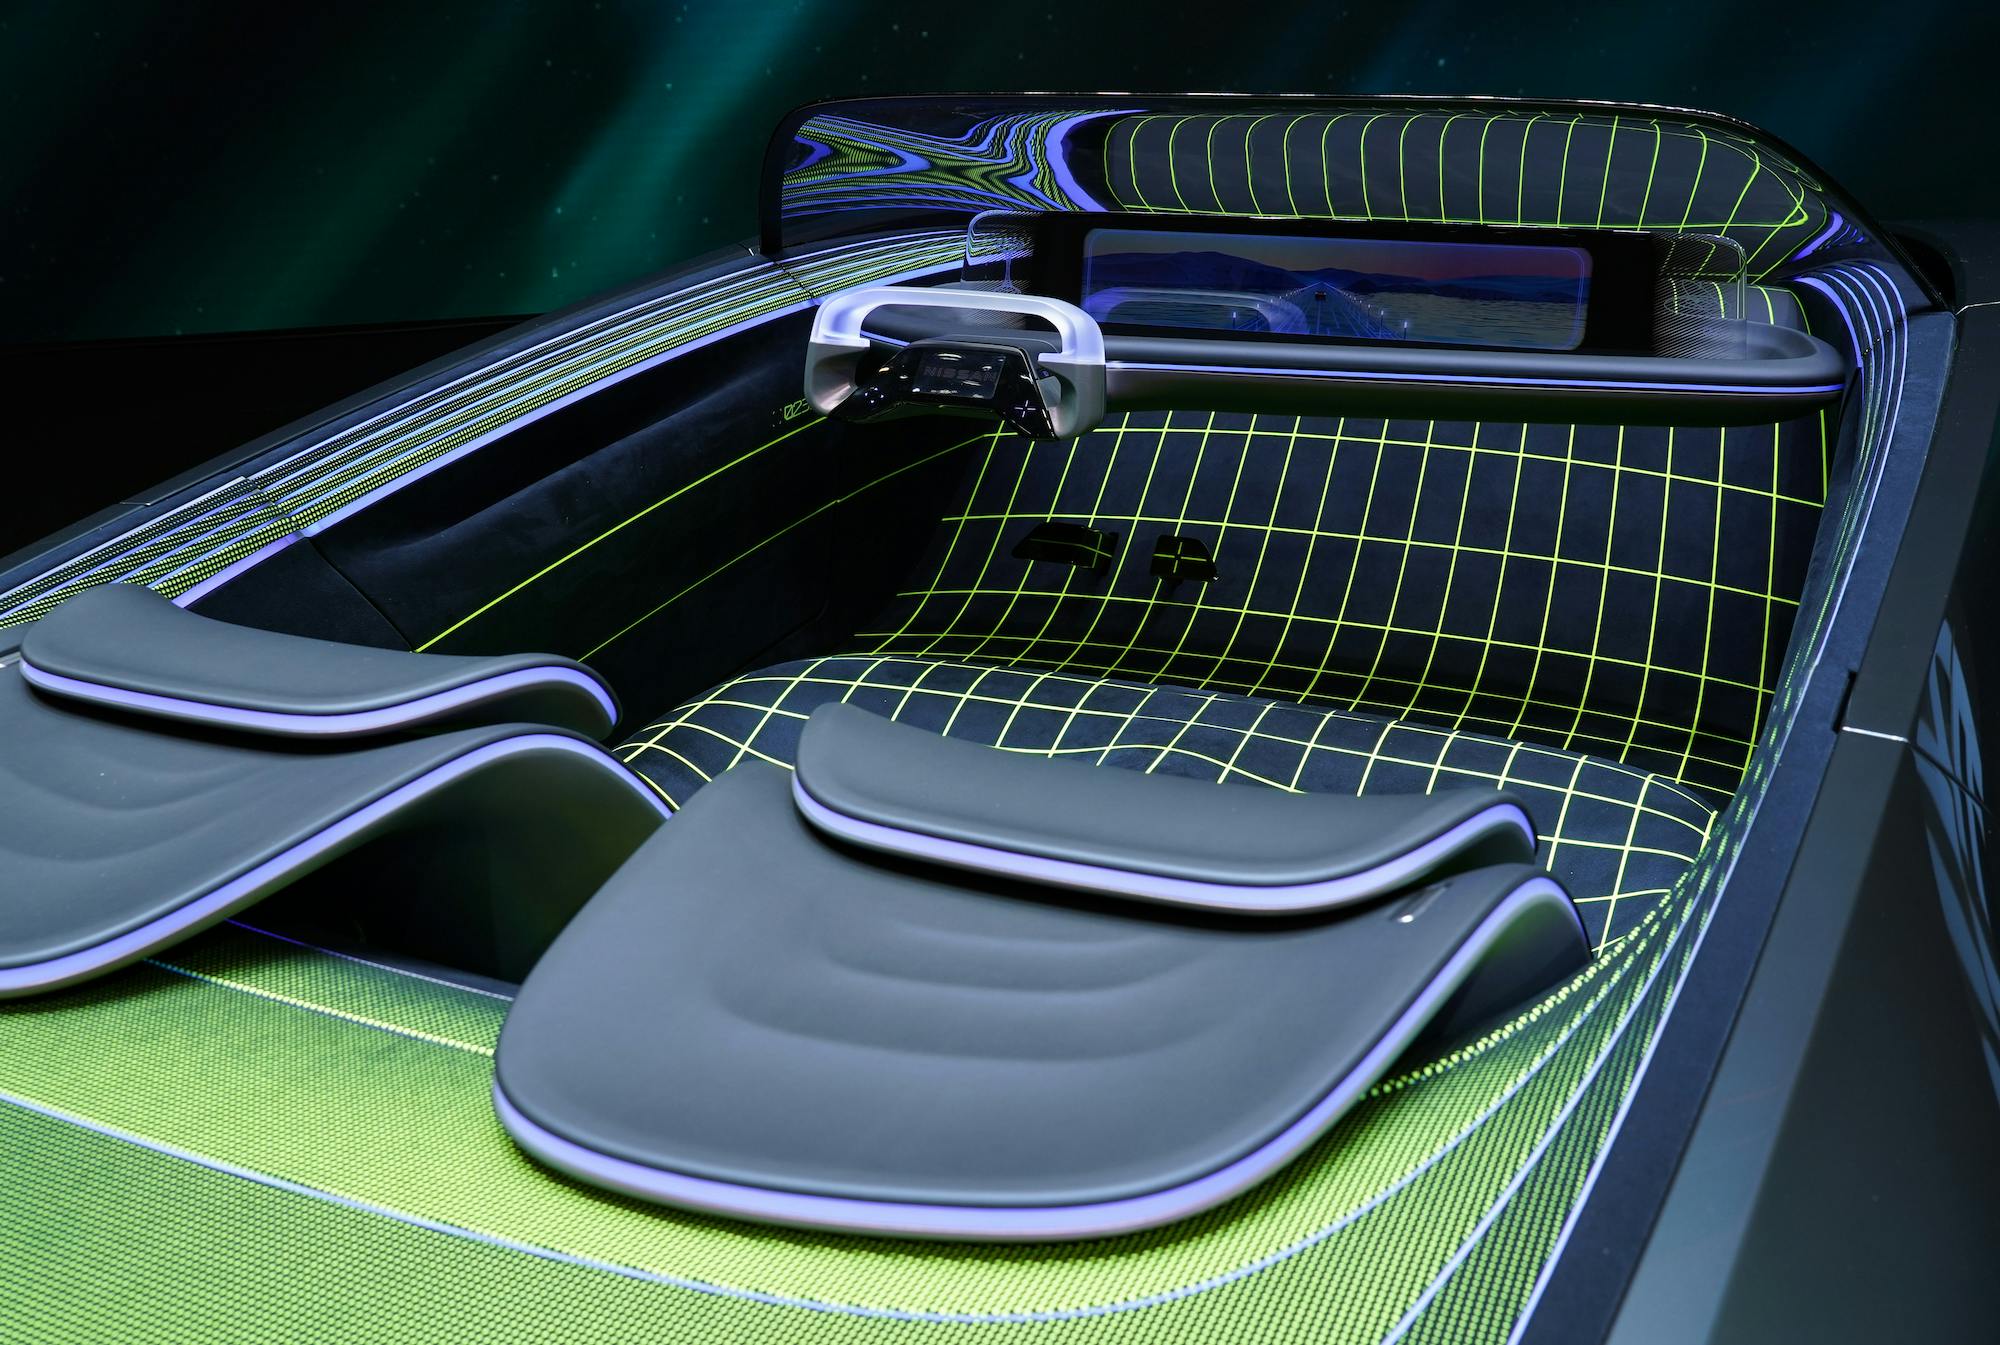 Nissan Max-Out Futuristic Concept Car interior seats back